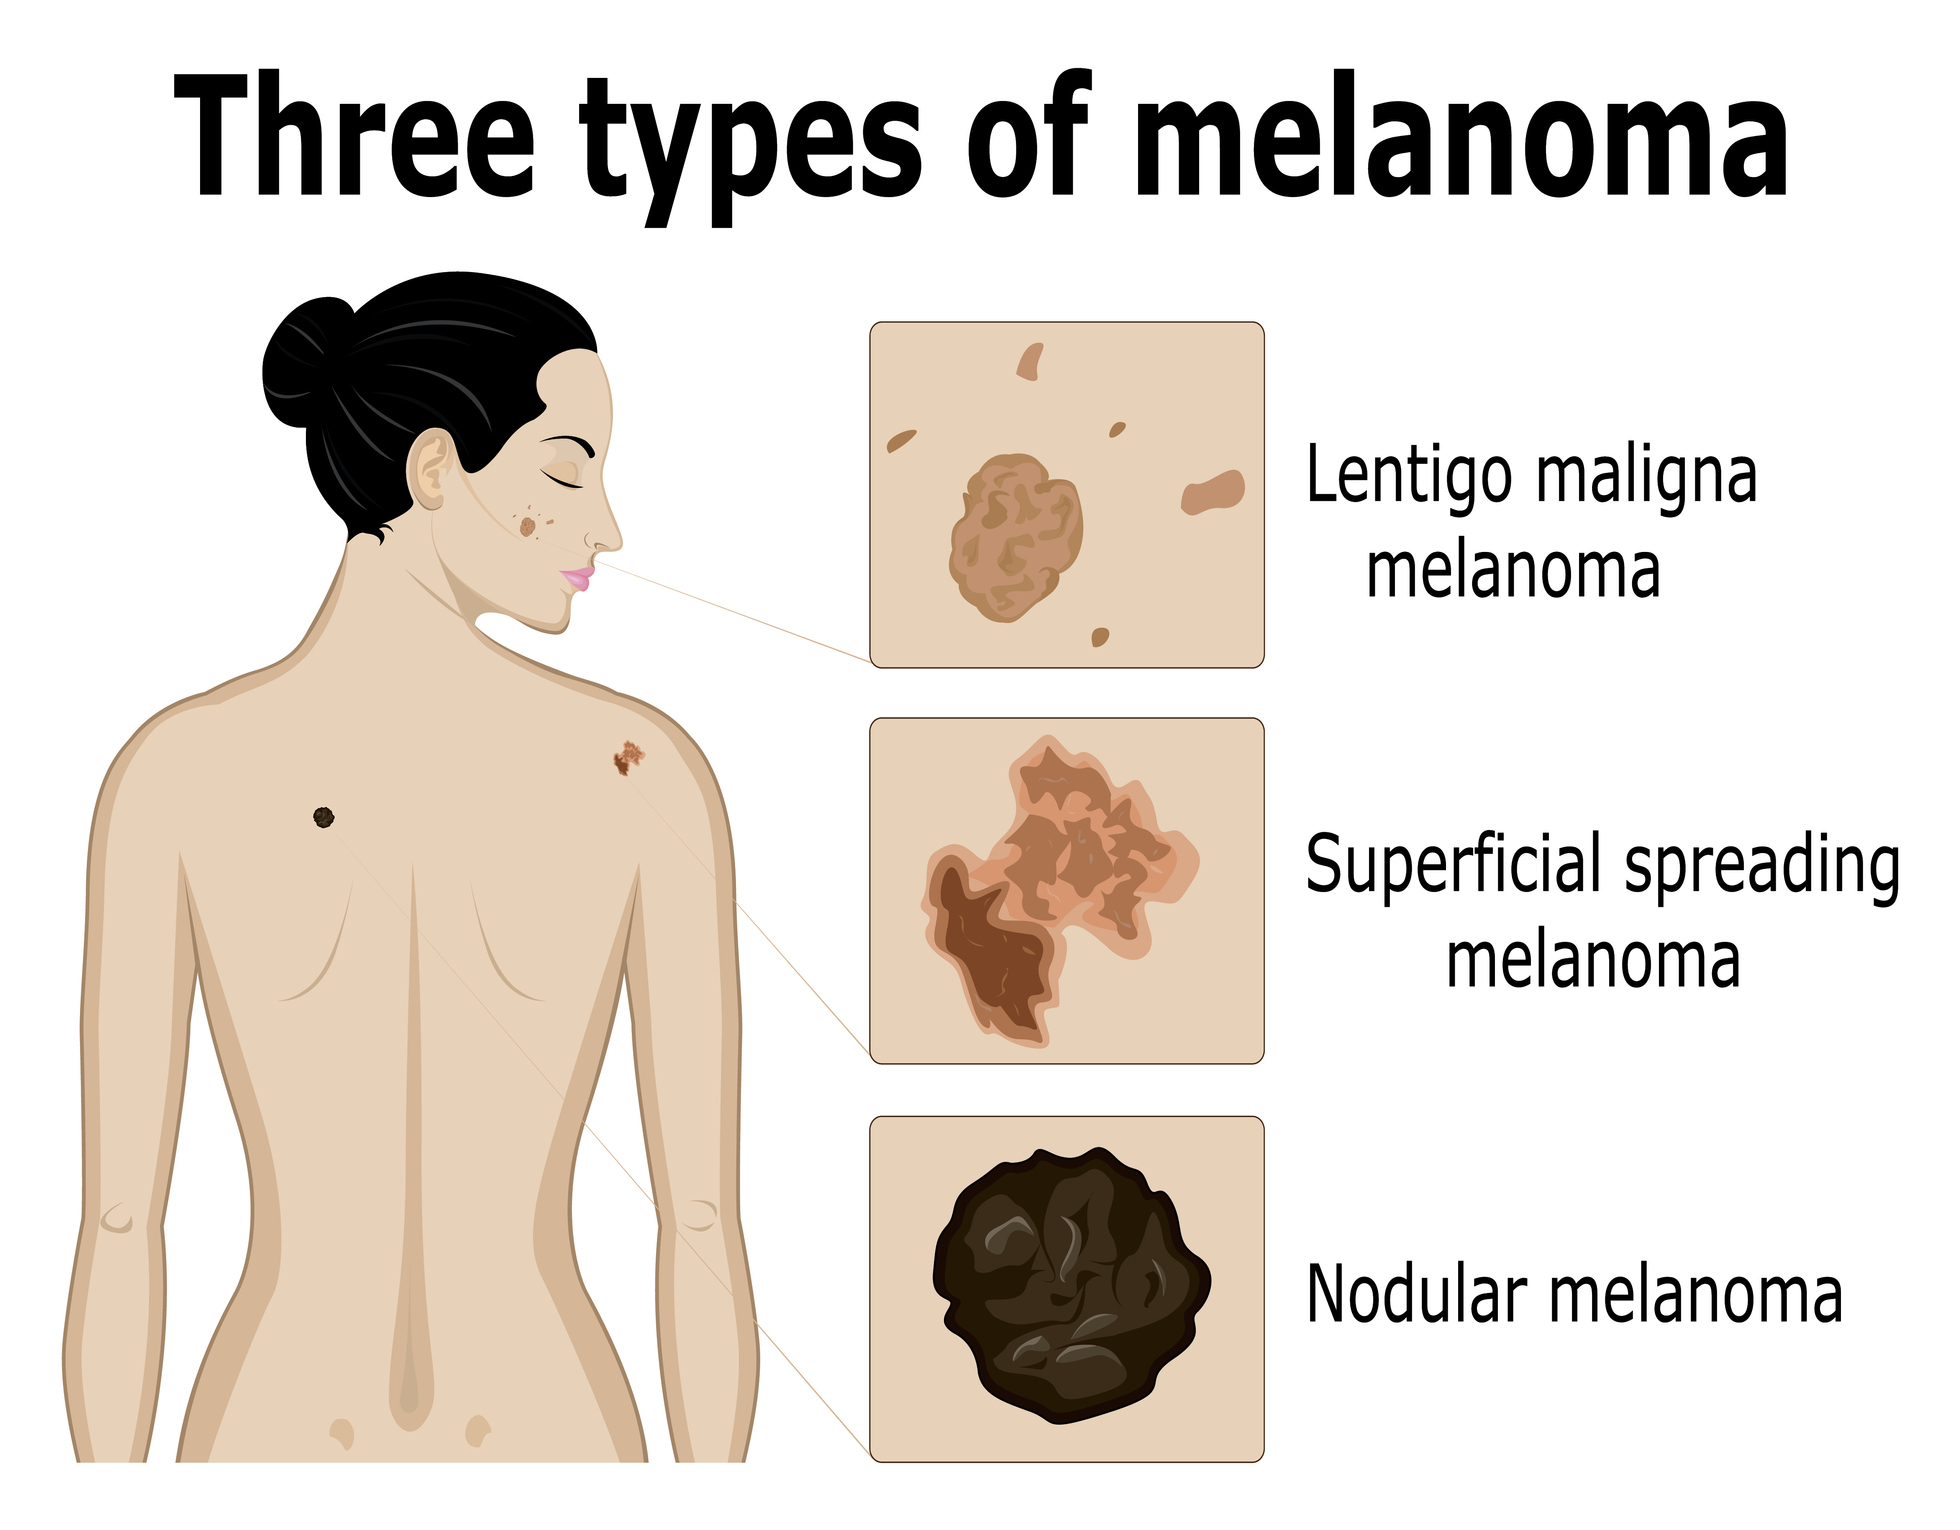 Imaging of the three types of melanoma